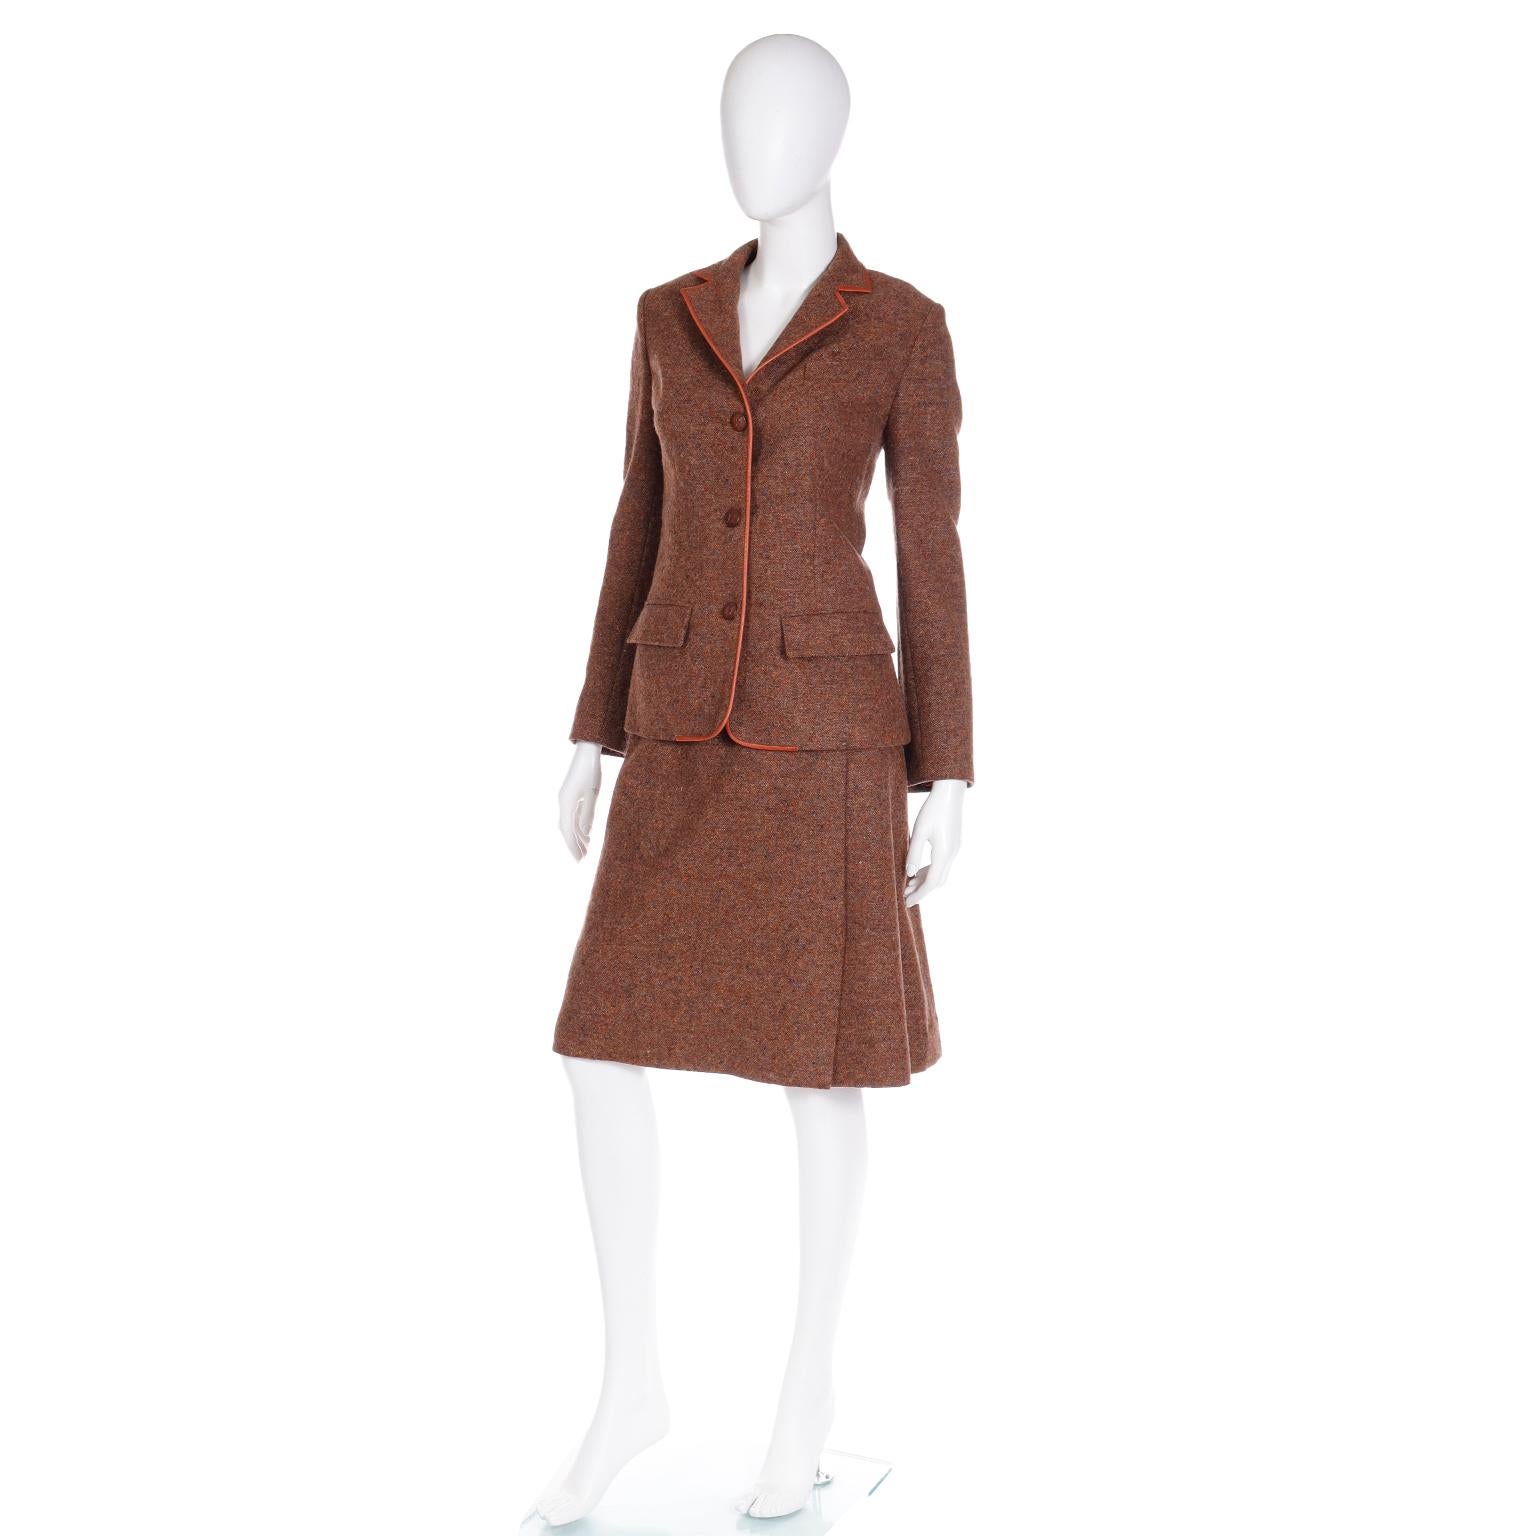 Hermes Vintage 1970s 2pc Jacket & Skirt Suit in Brown Tweed With Leather Trim Excellent état - En vente à Portland, OR